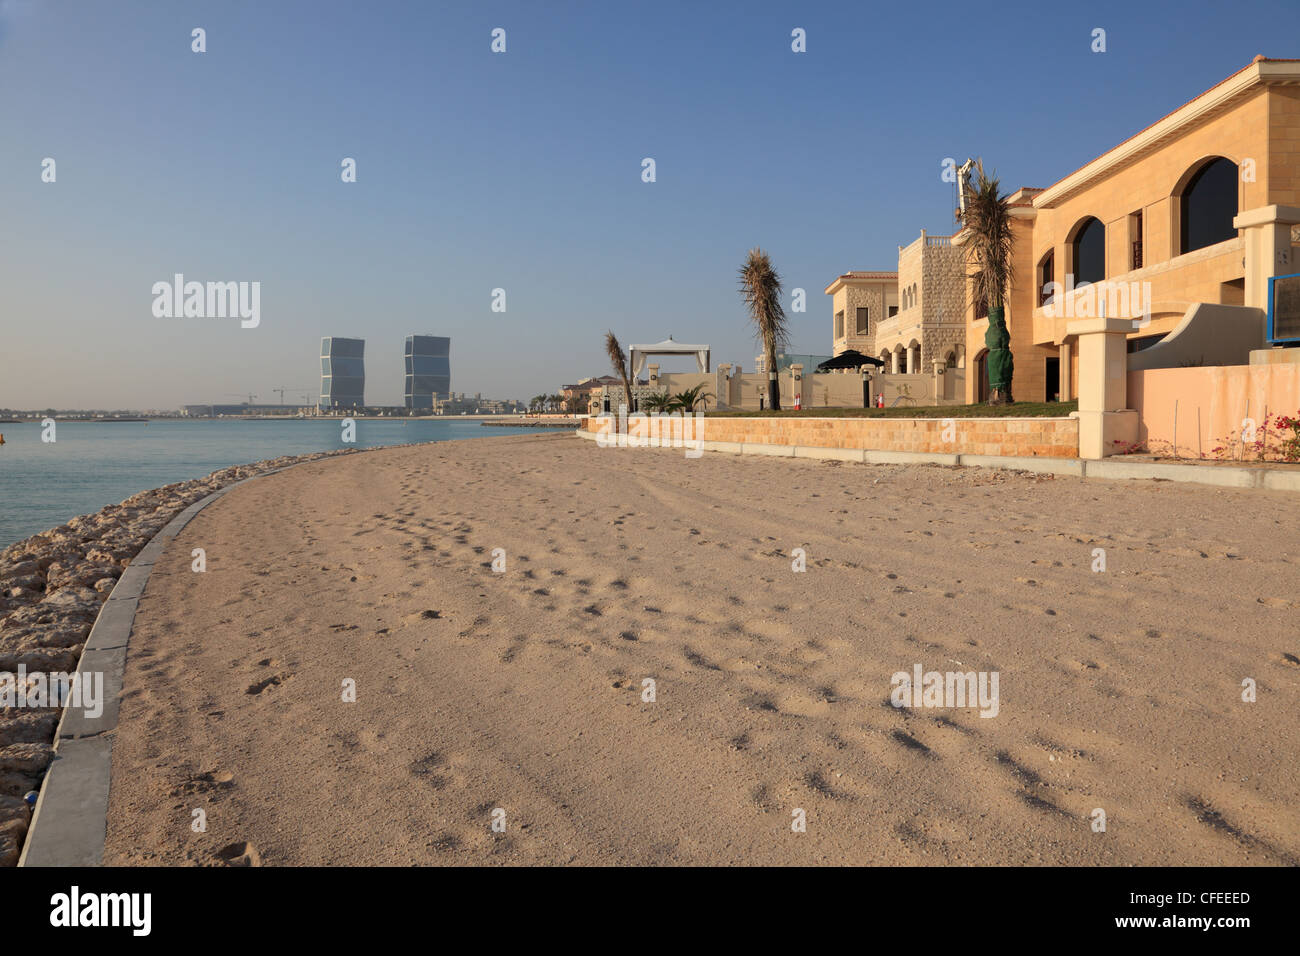 Beachside villas in The Pearl of Doha, Qatar Stock Photo